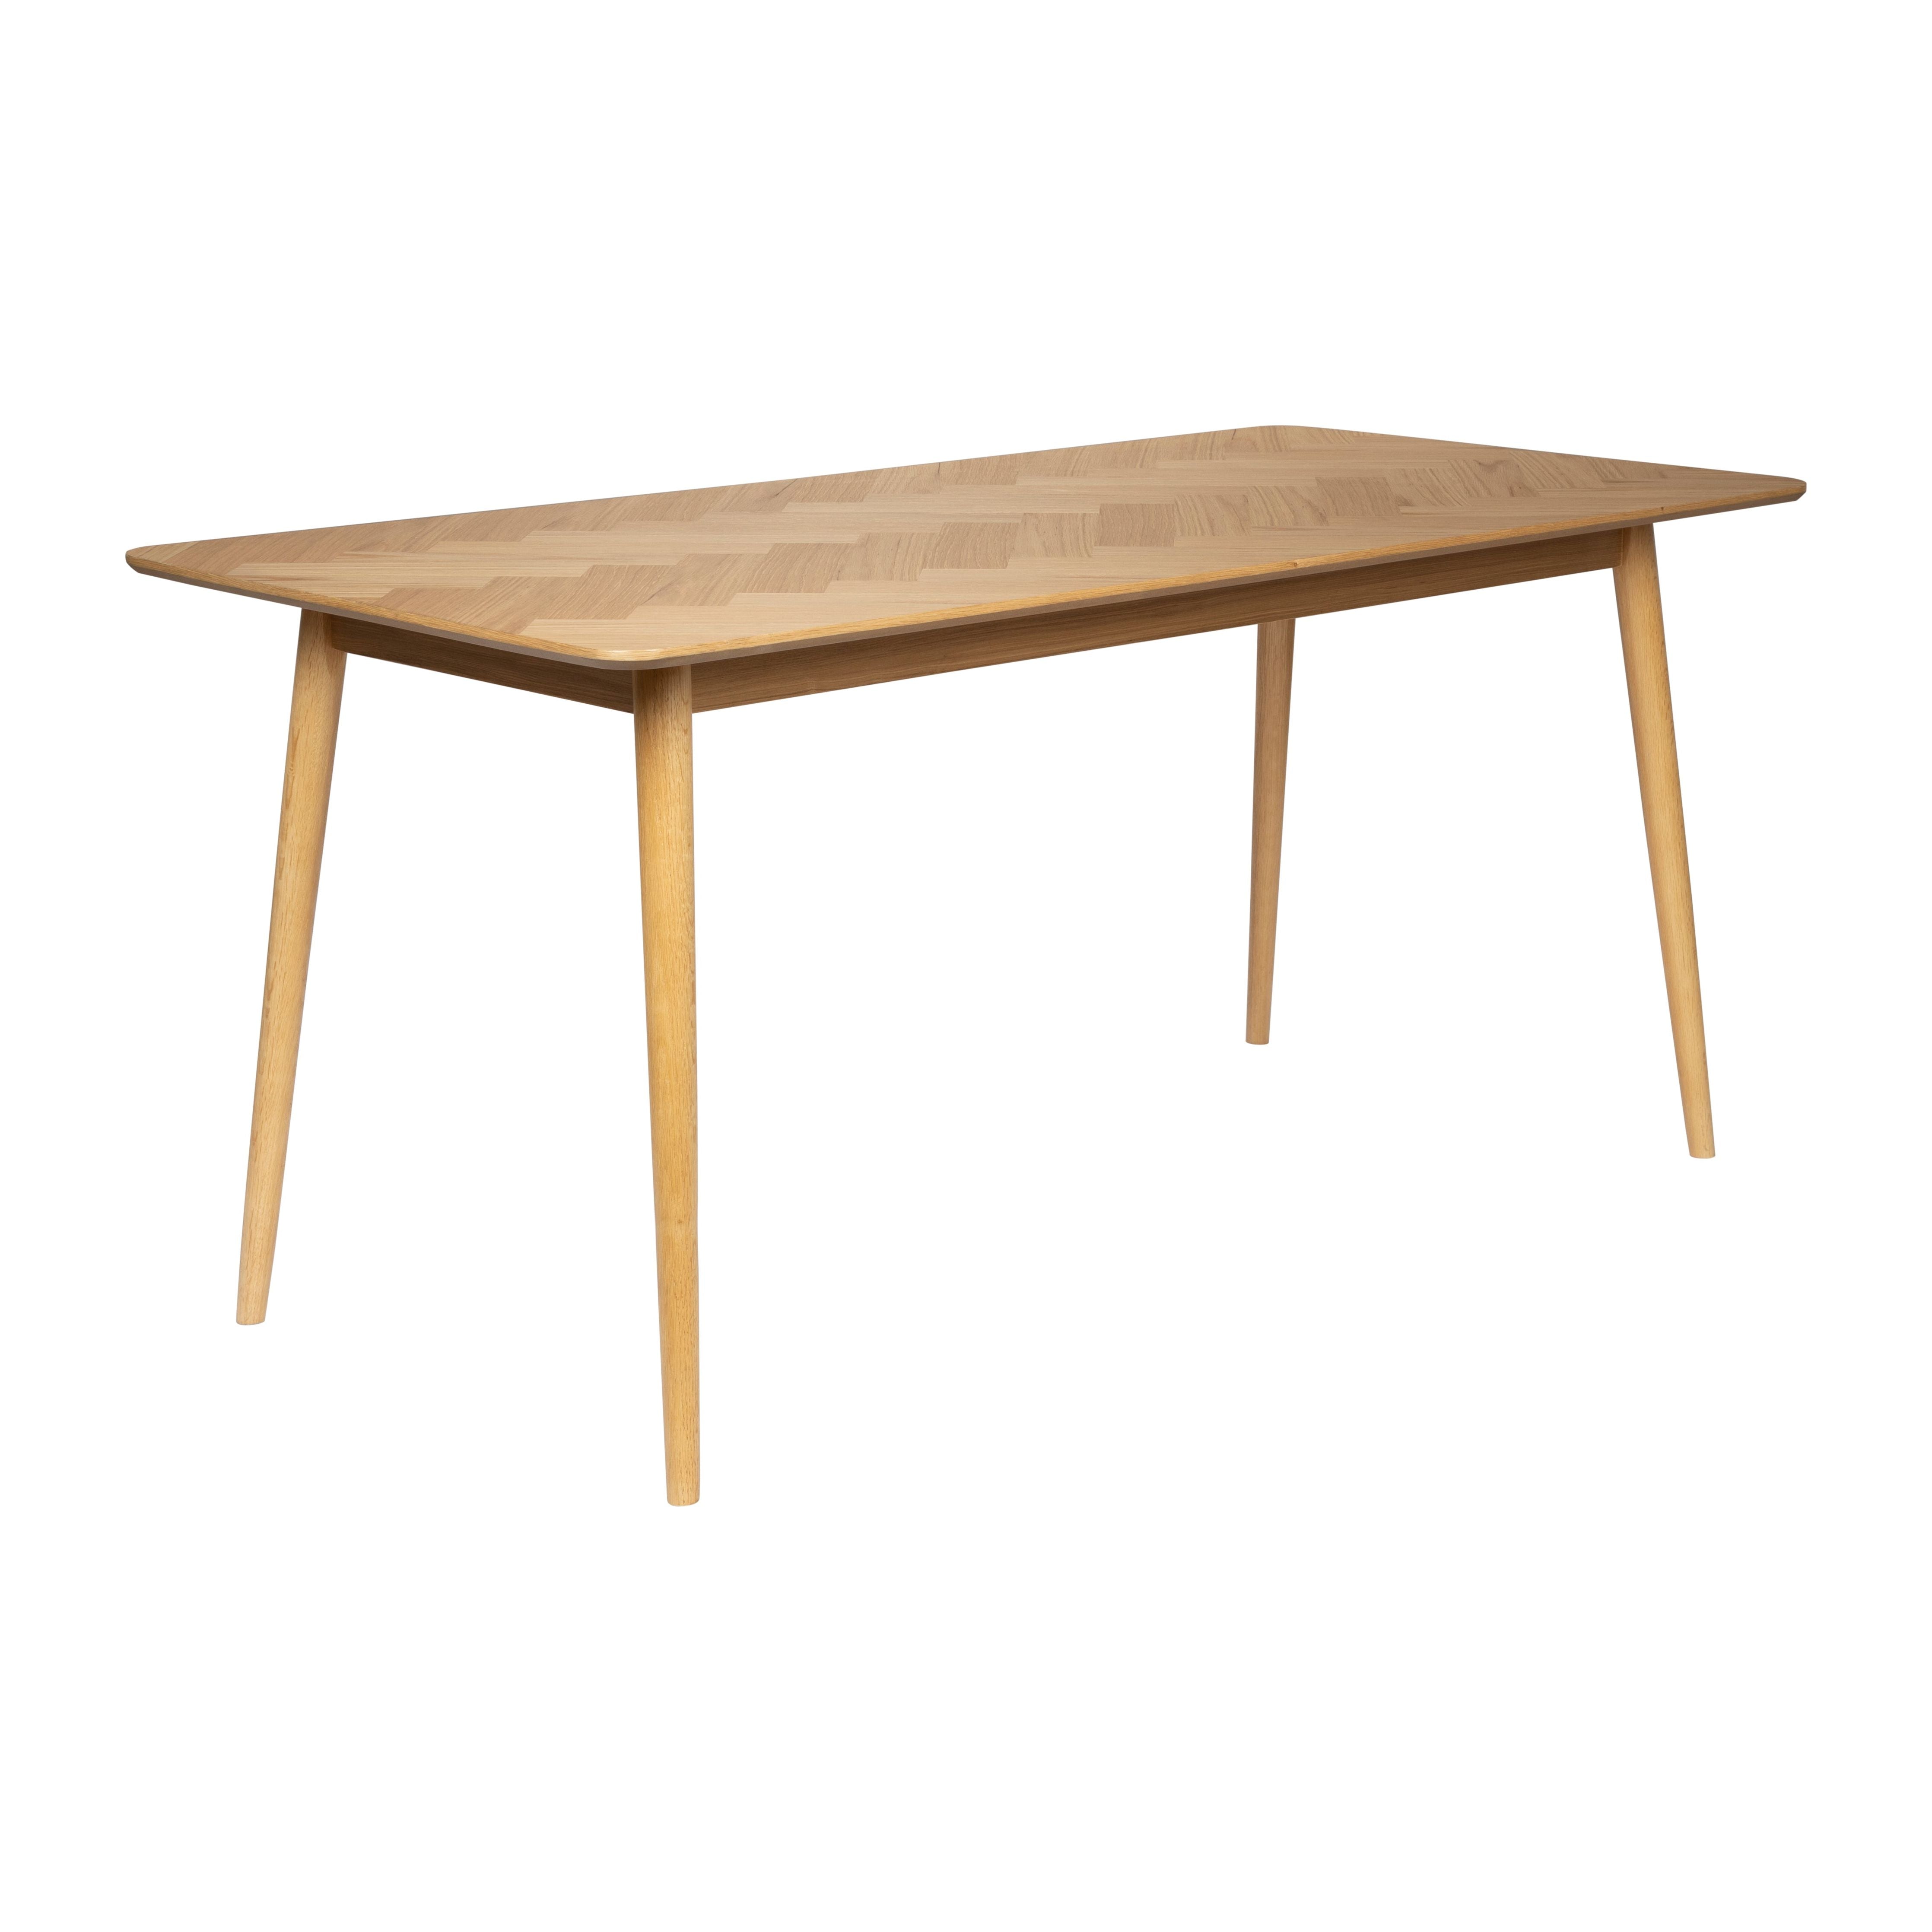 Table fabio 160x80 natural